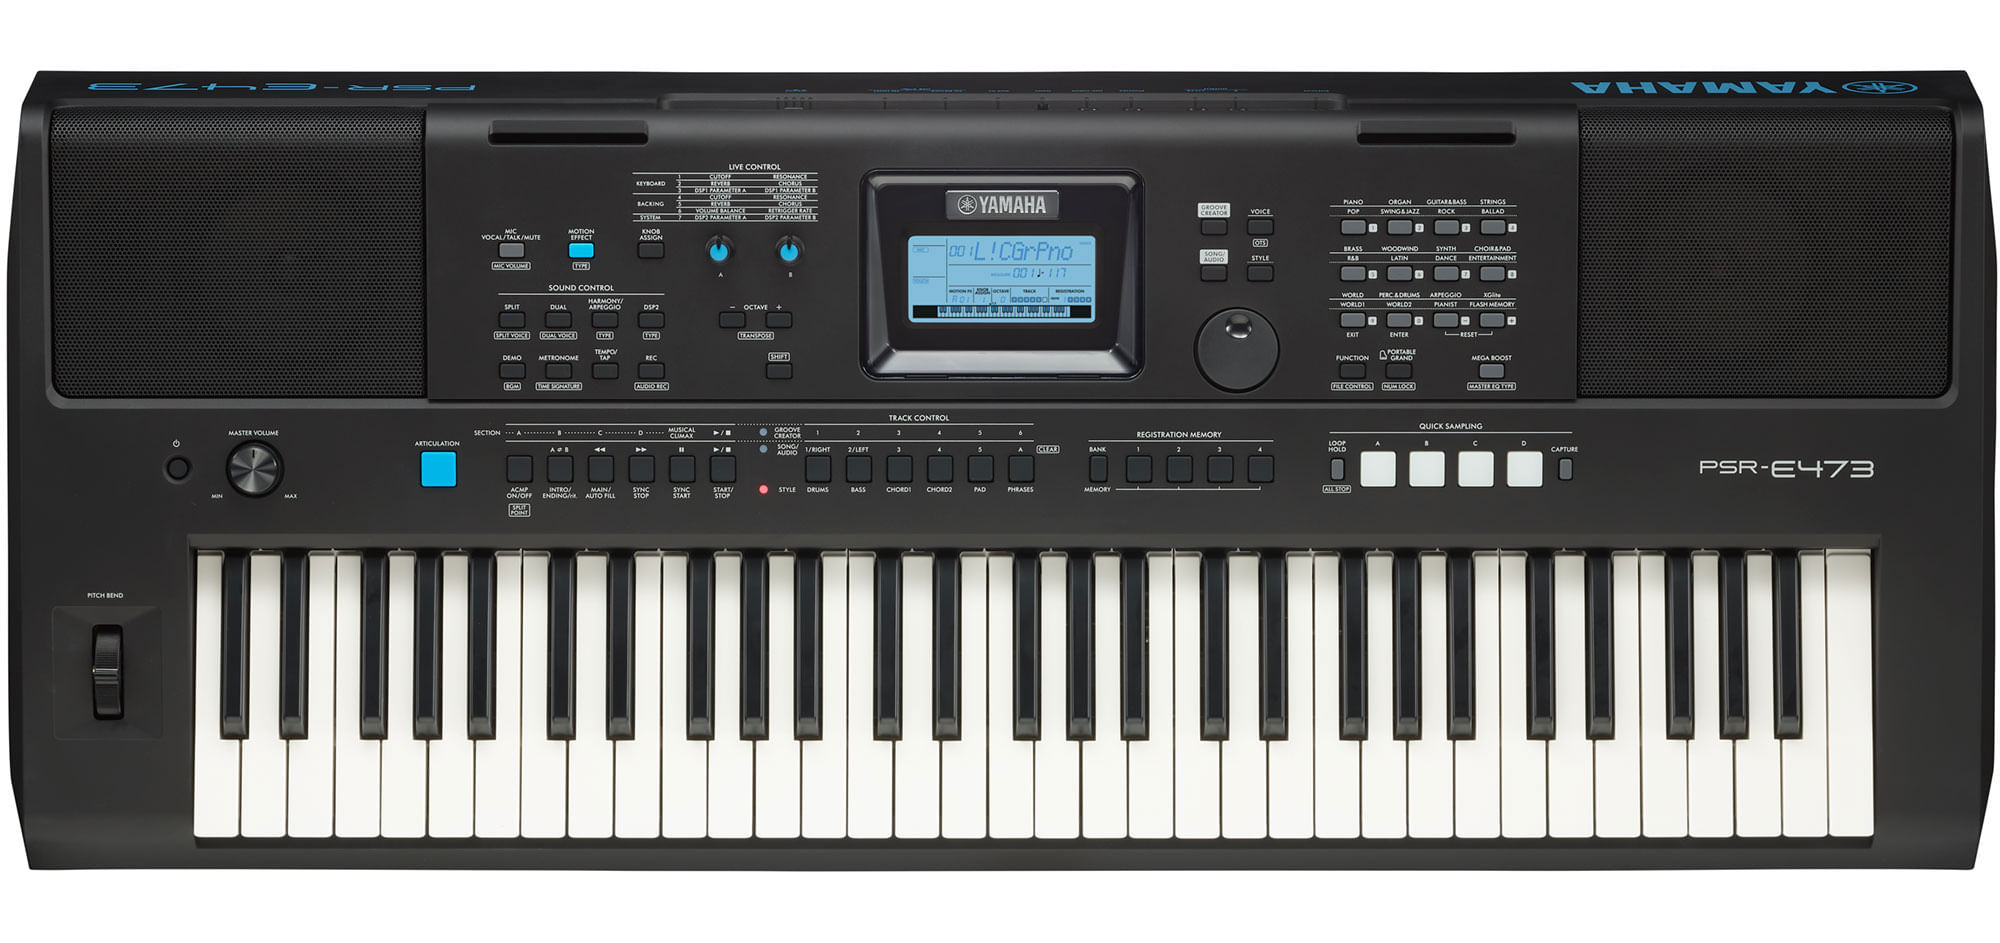 Yamaha PSR-E473 Portable Keyboard - Cosmo Music | Canada's #1 Music Store -  Shop, Rent, Repair